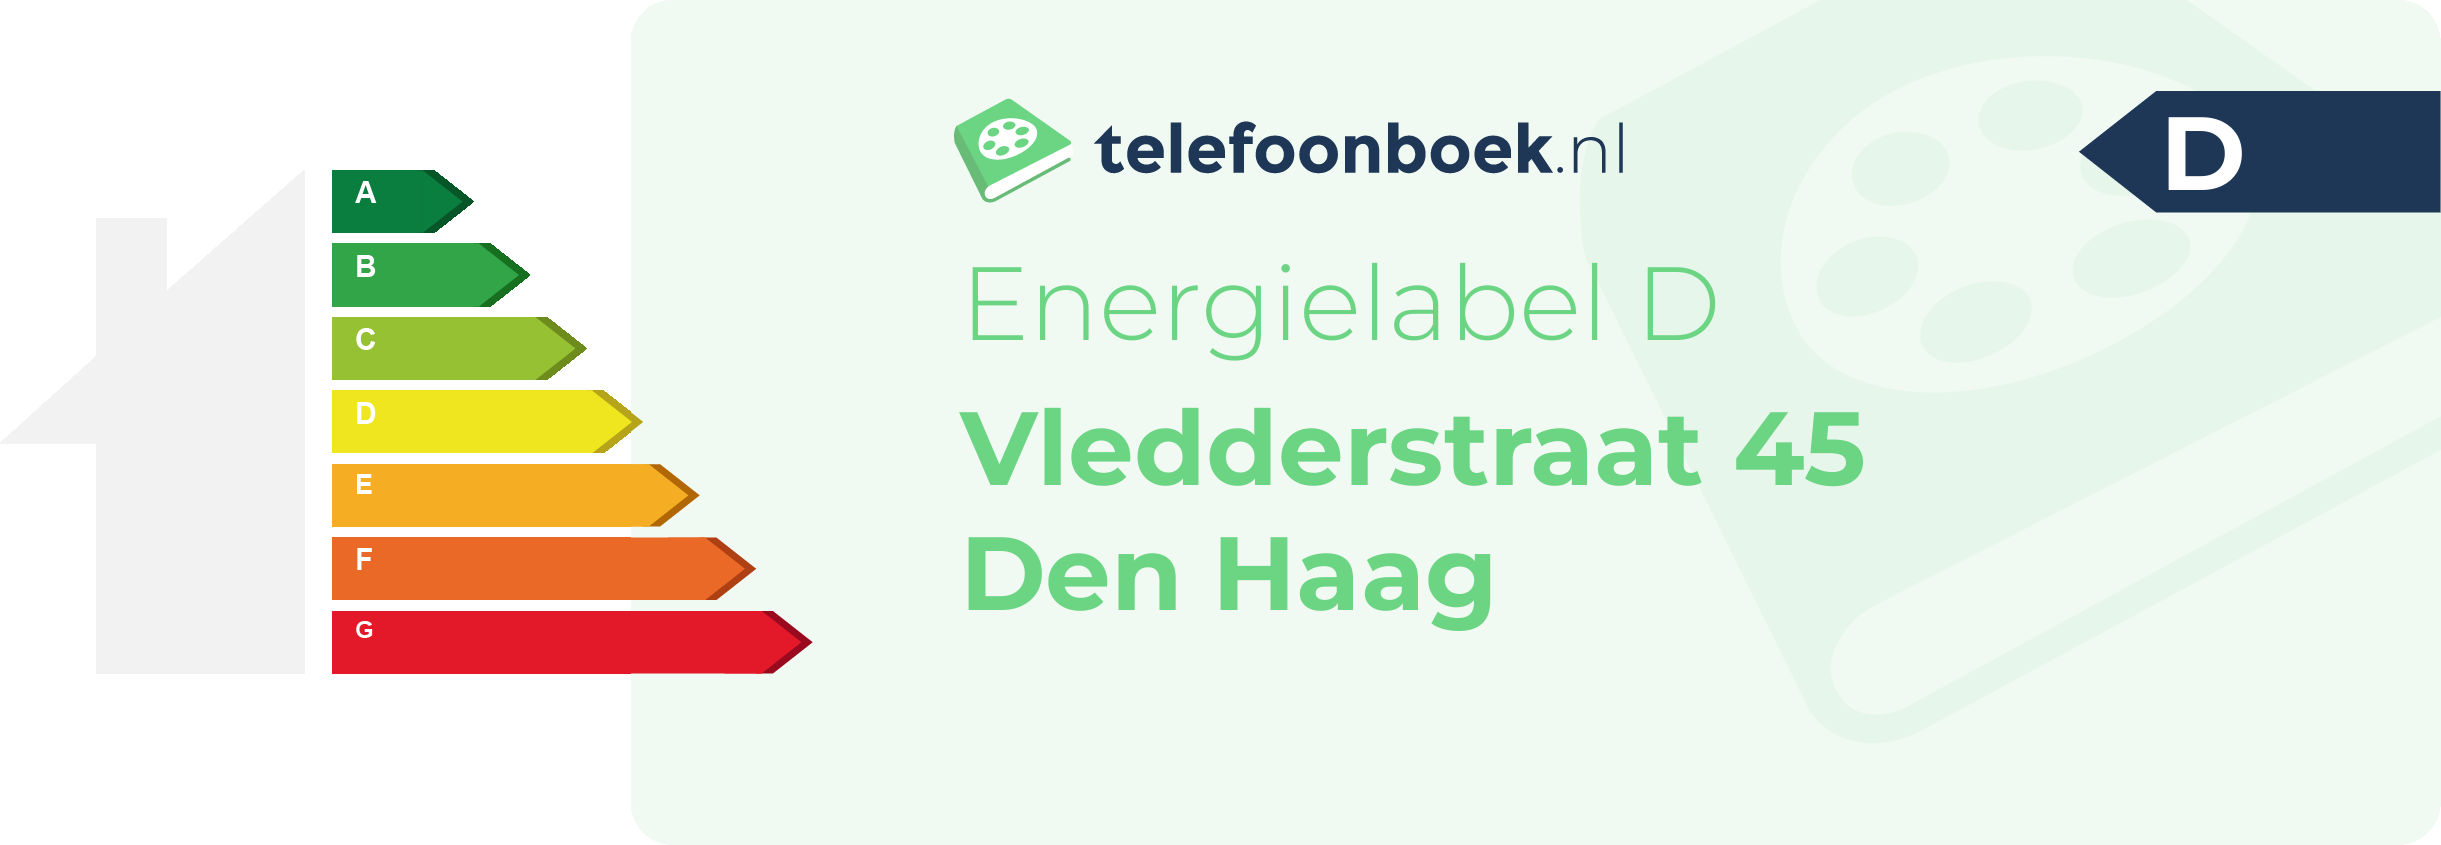 Energielabel Vledderstraat 45 Den Haag